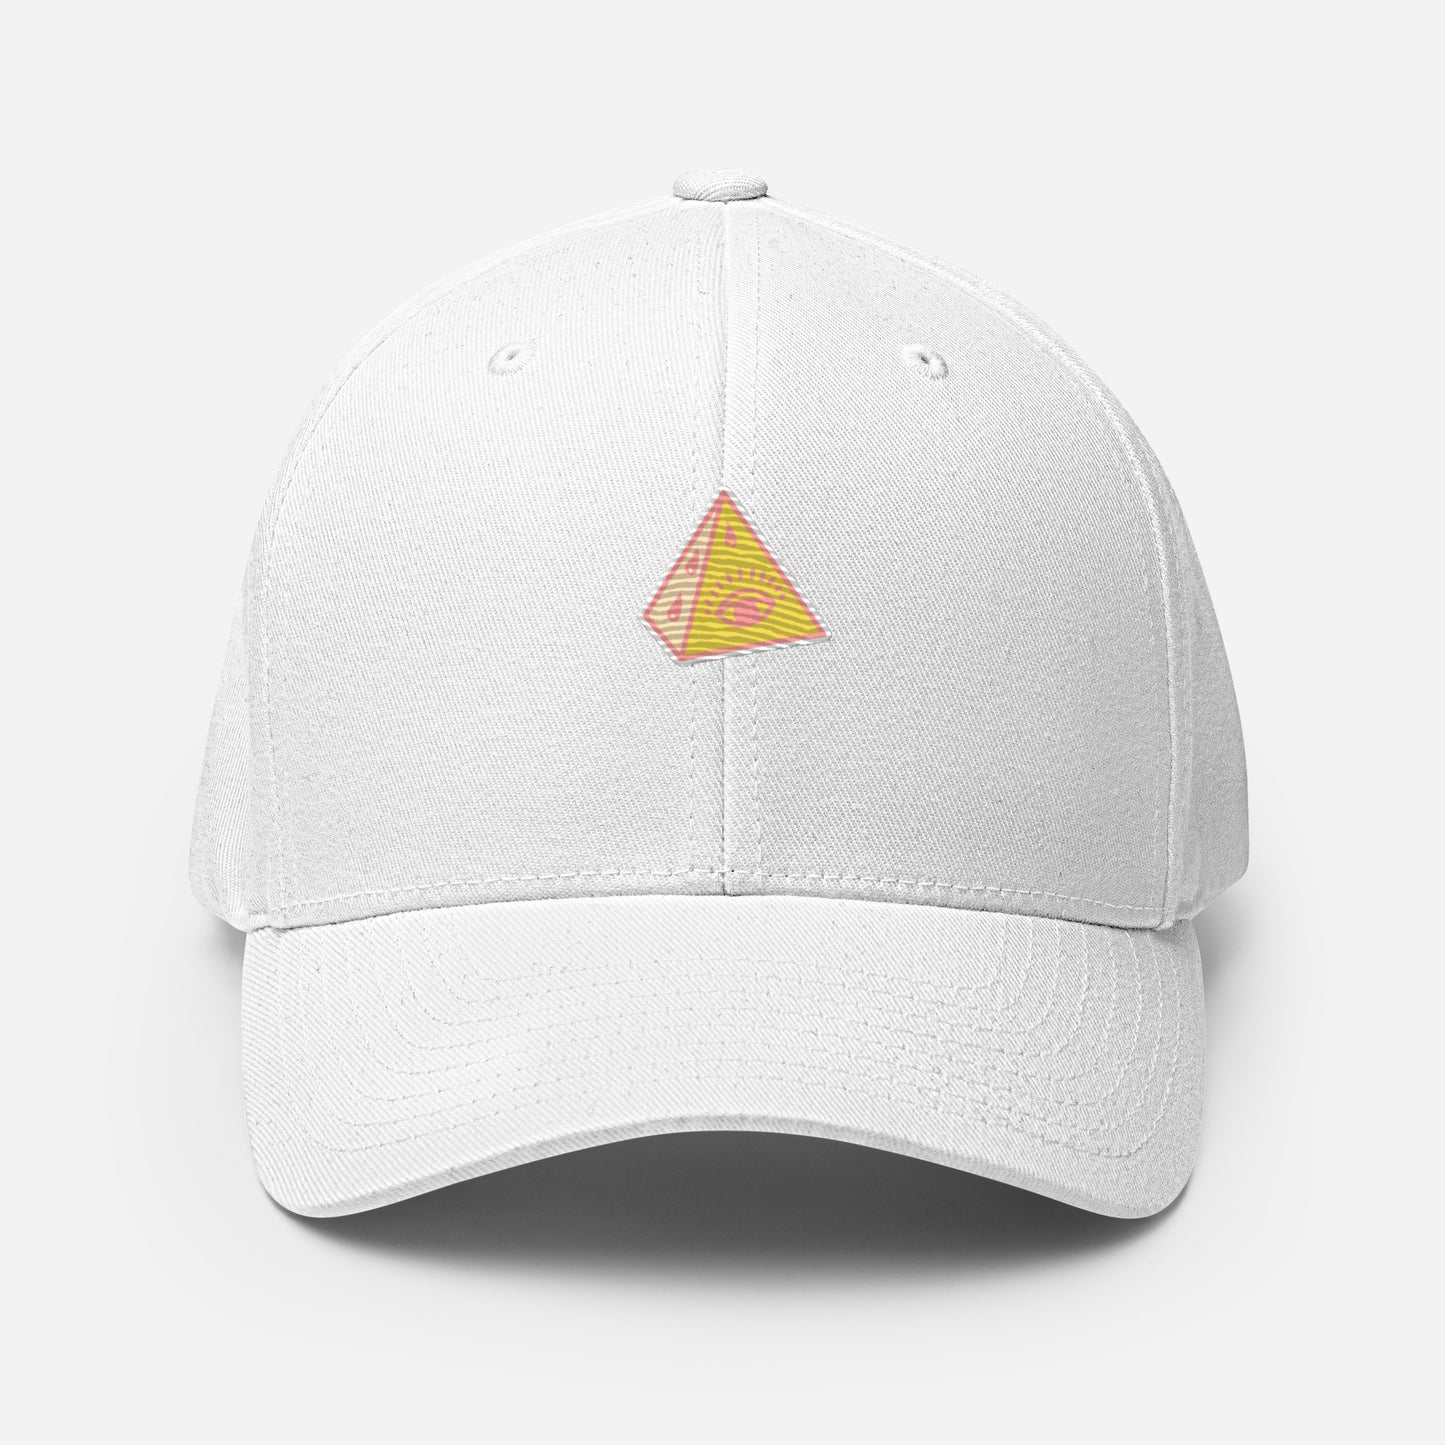 Baseball Cap with Pyramid Symbol